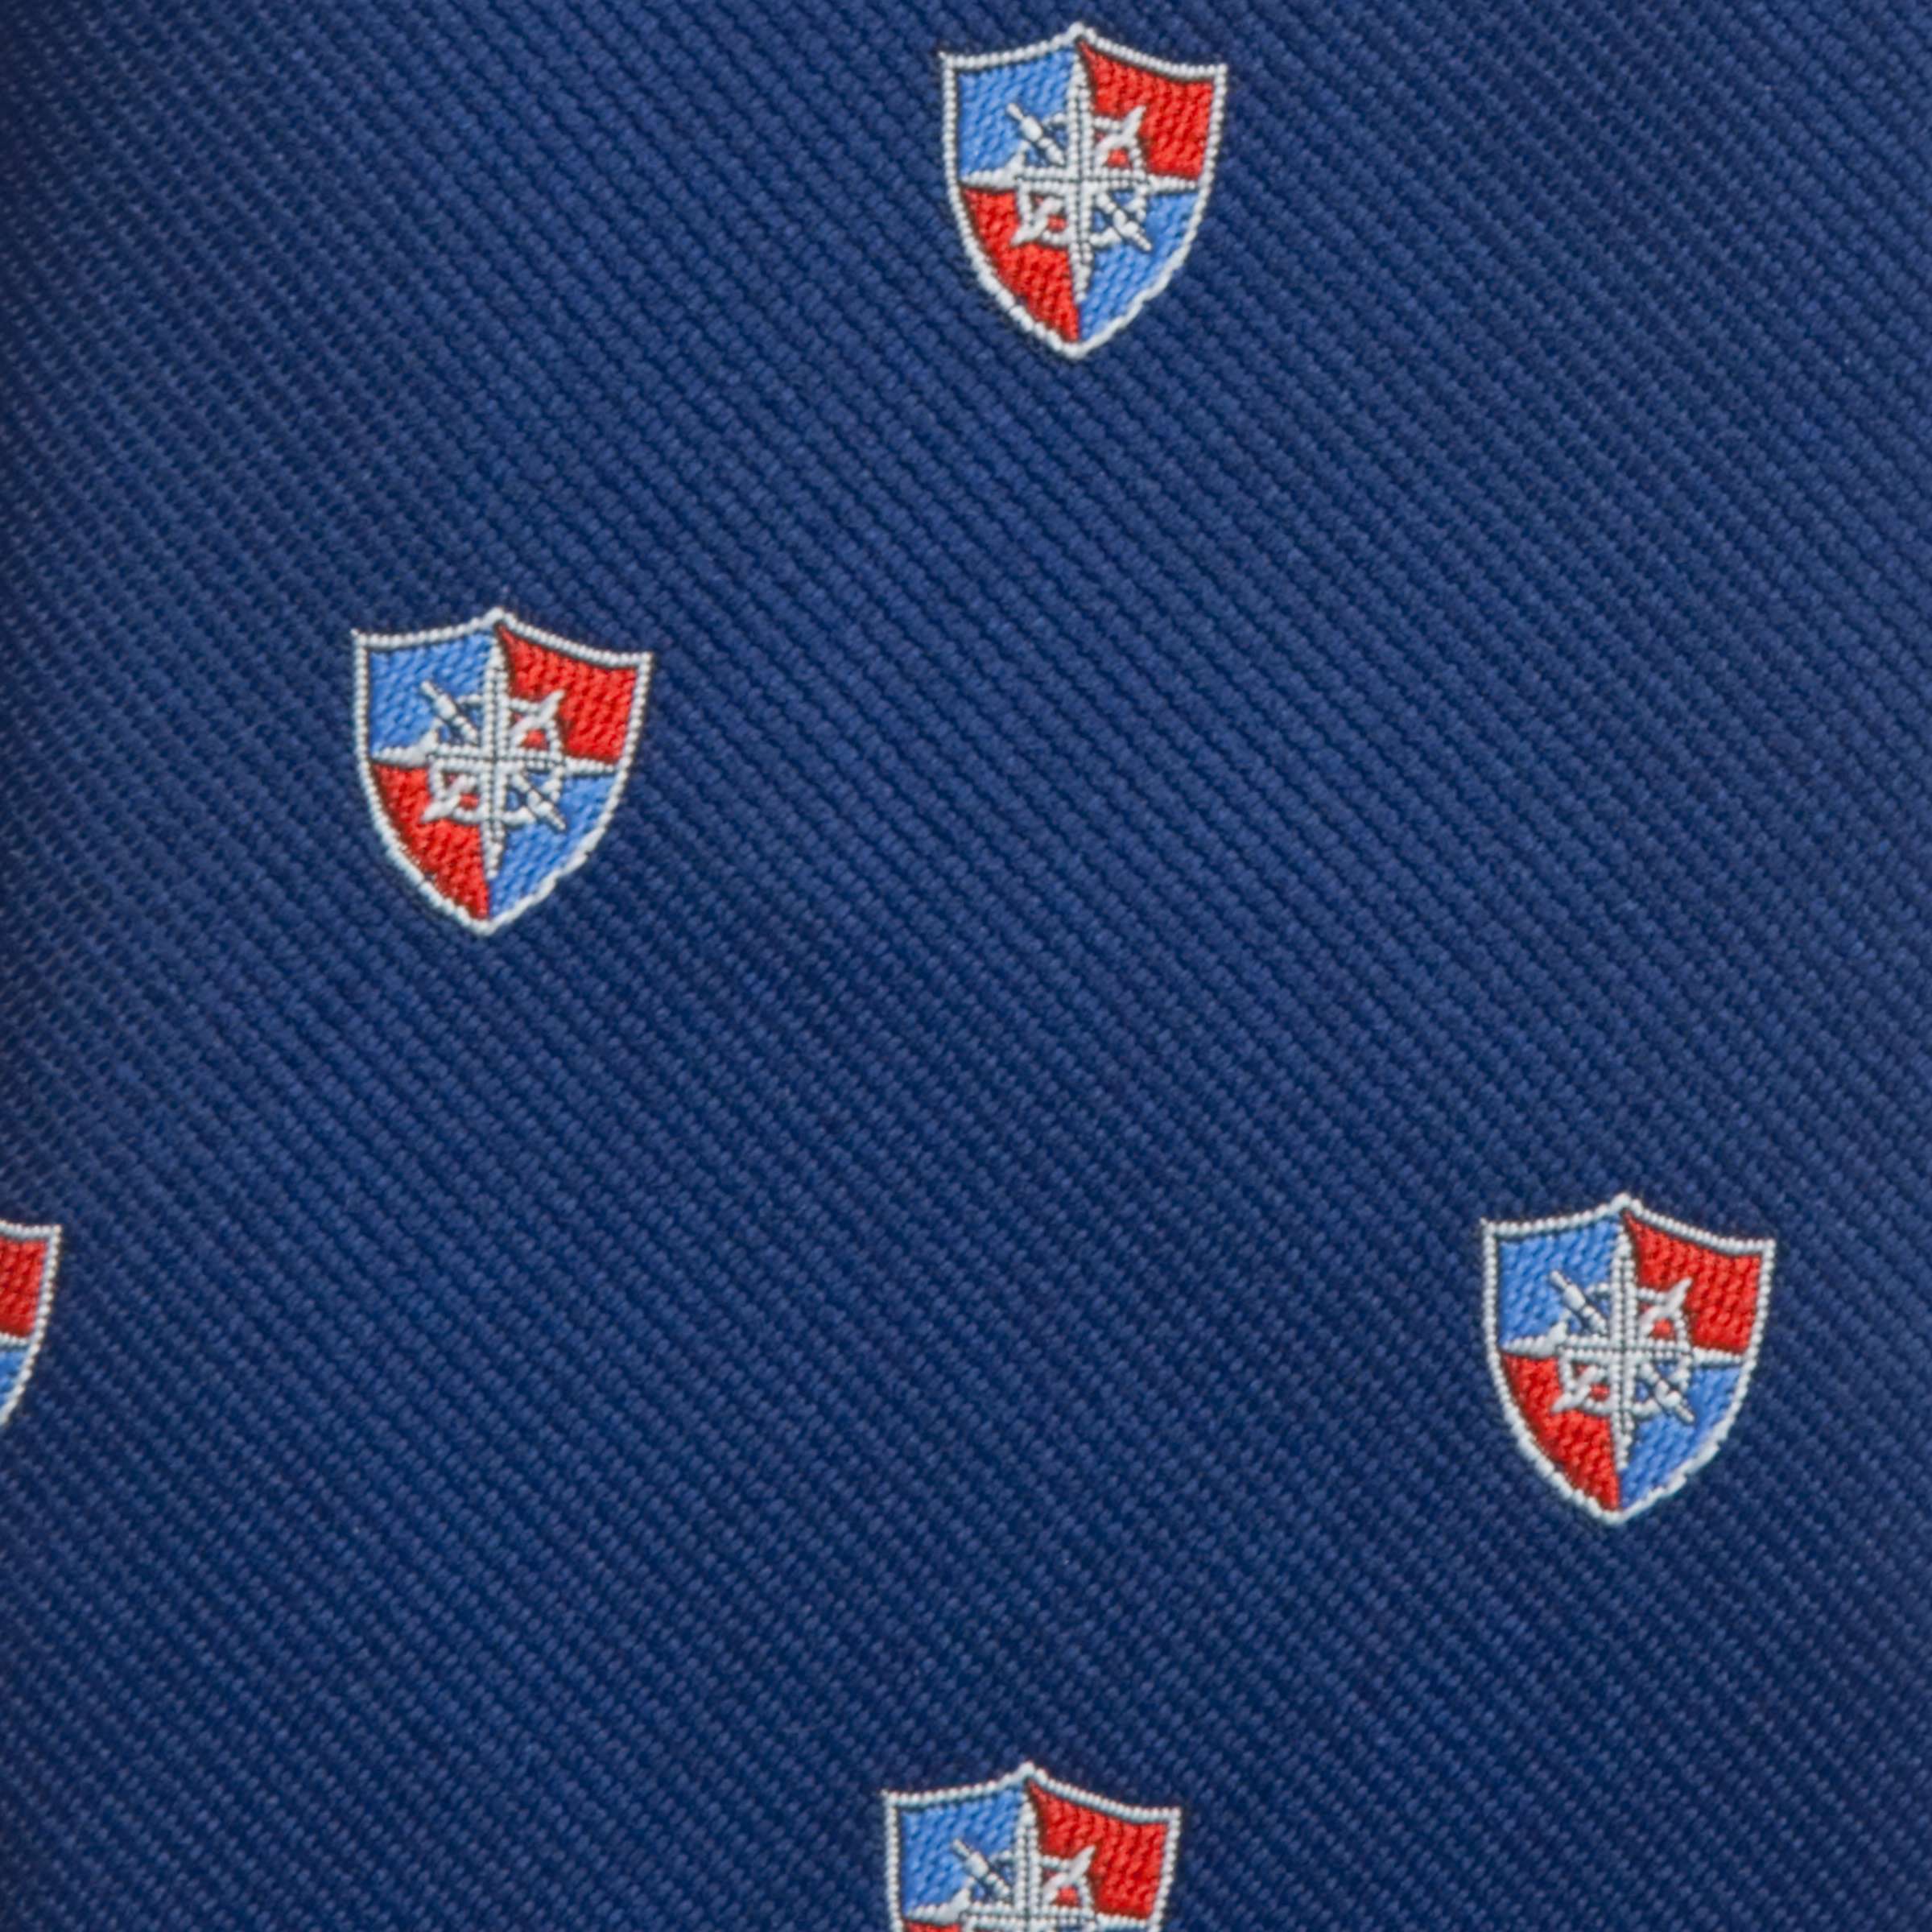 Buy Fairley House School Junior and Senior Boys' Tie, Blue Online at johnlewis.com